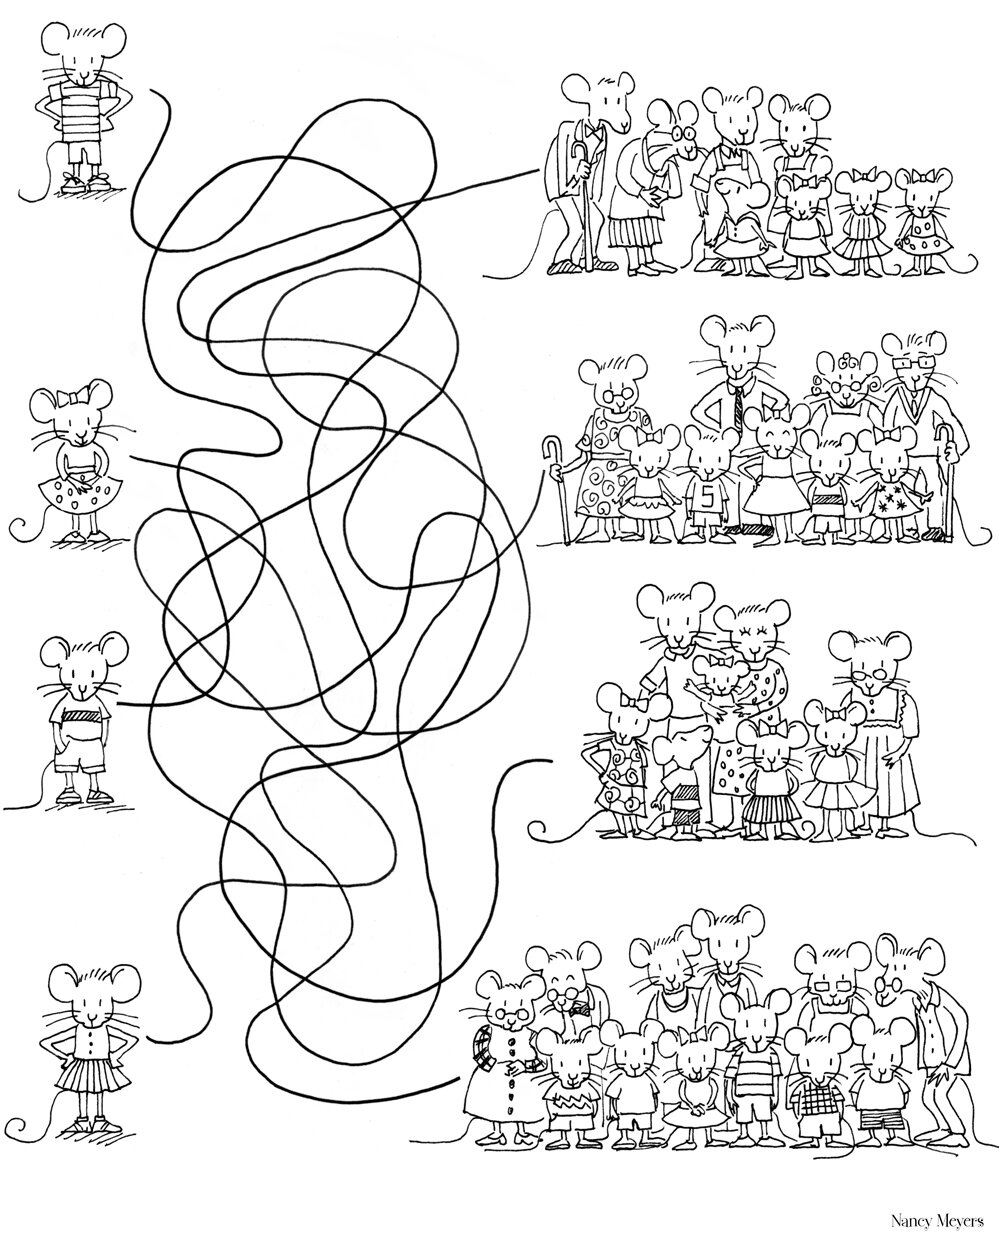 Mice-SS.jpg